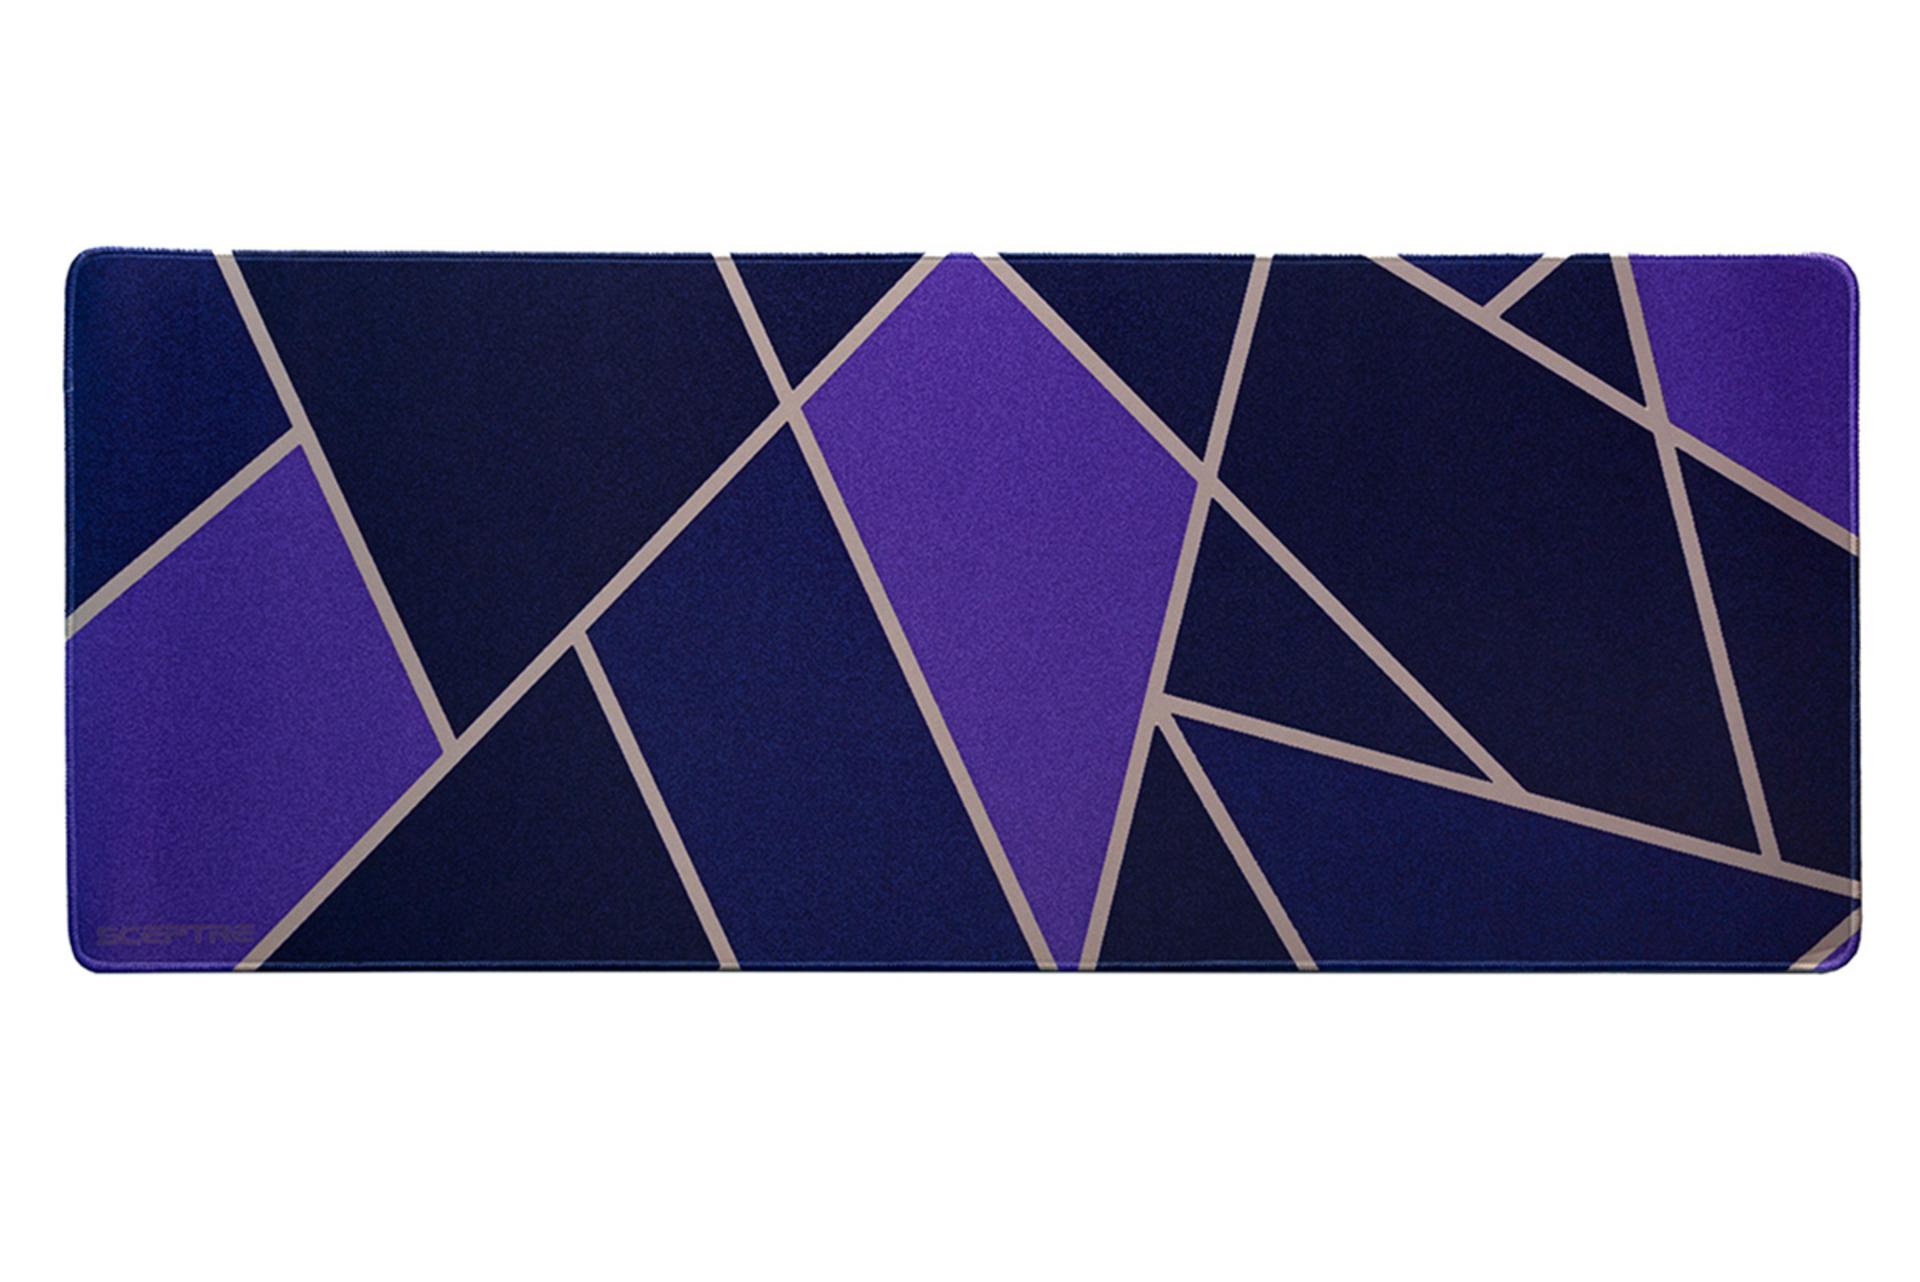 نمای جلوی ماوس پد اسکپتر Modern Purple